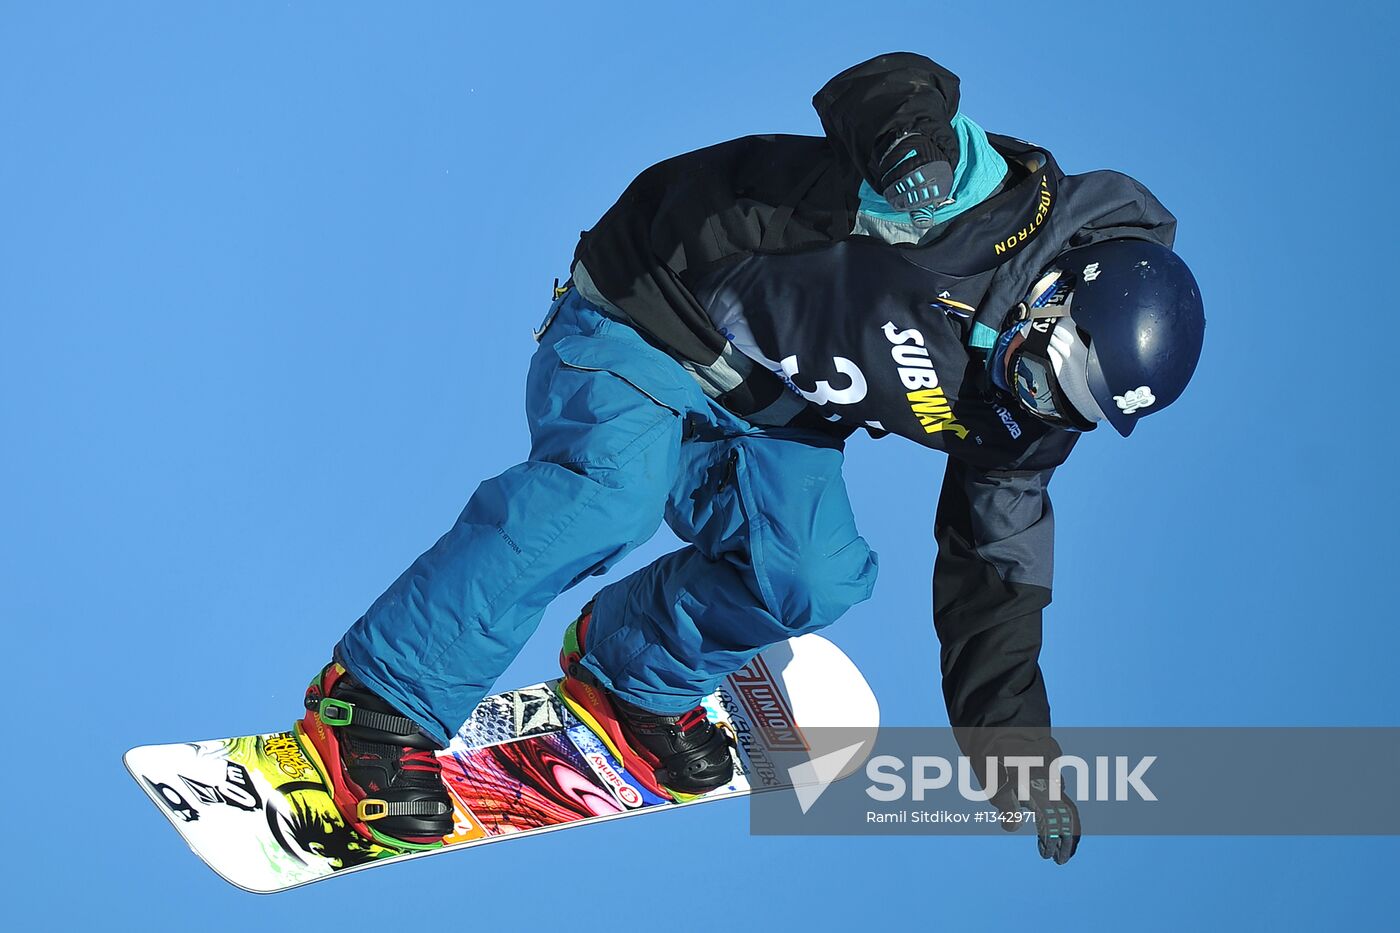 FIS Snowboard World Championship. Day 1